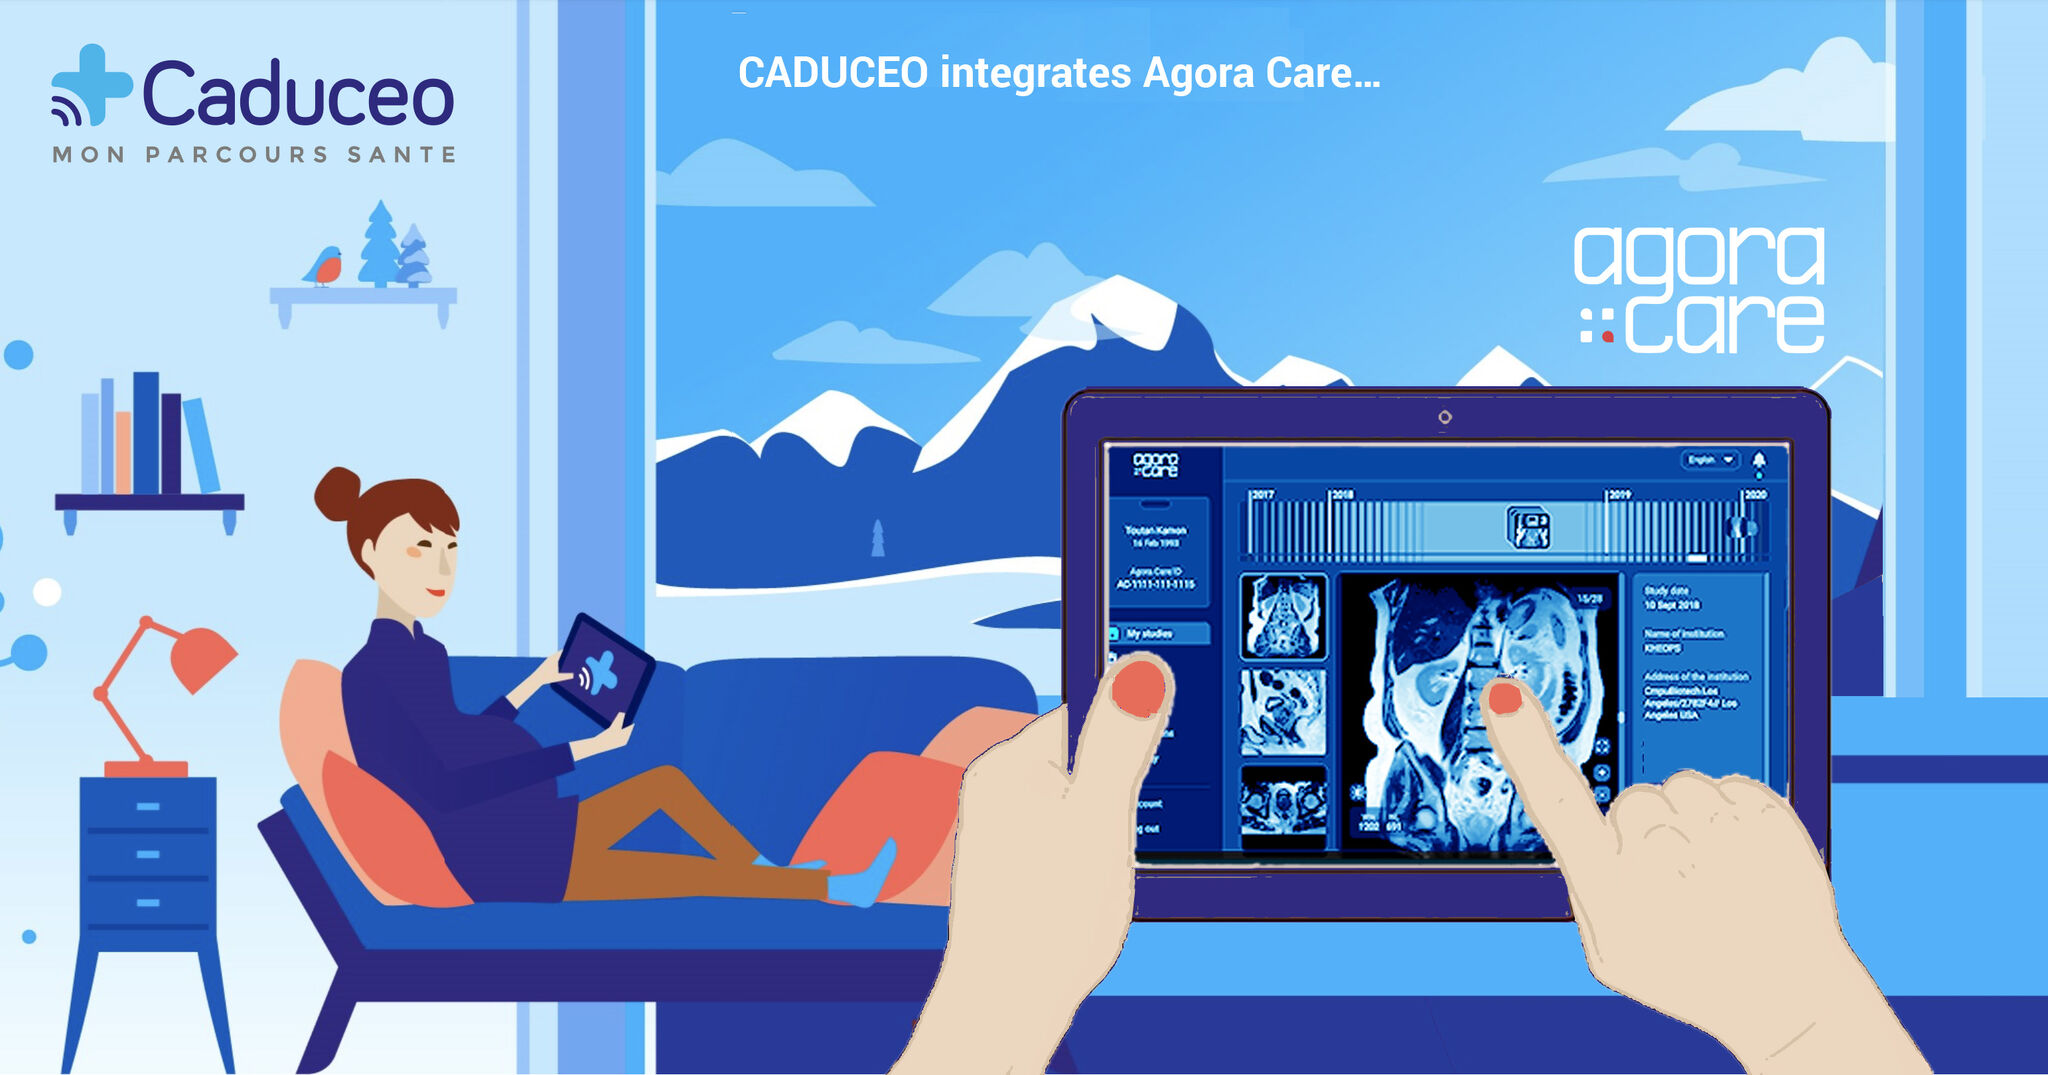 CADUCEO integrates Agora Care in its platform